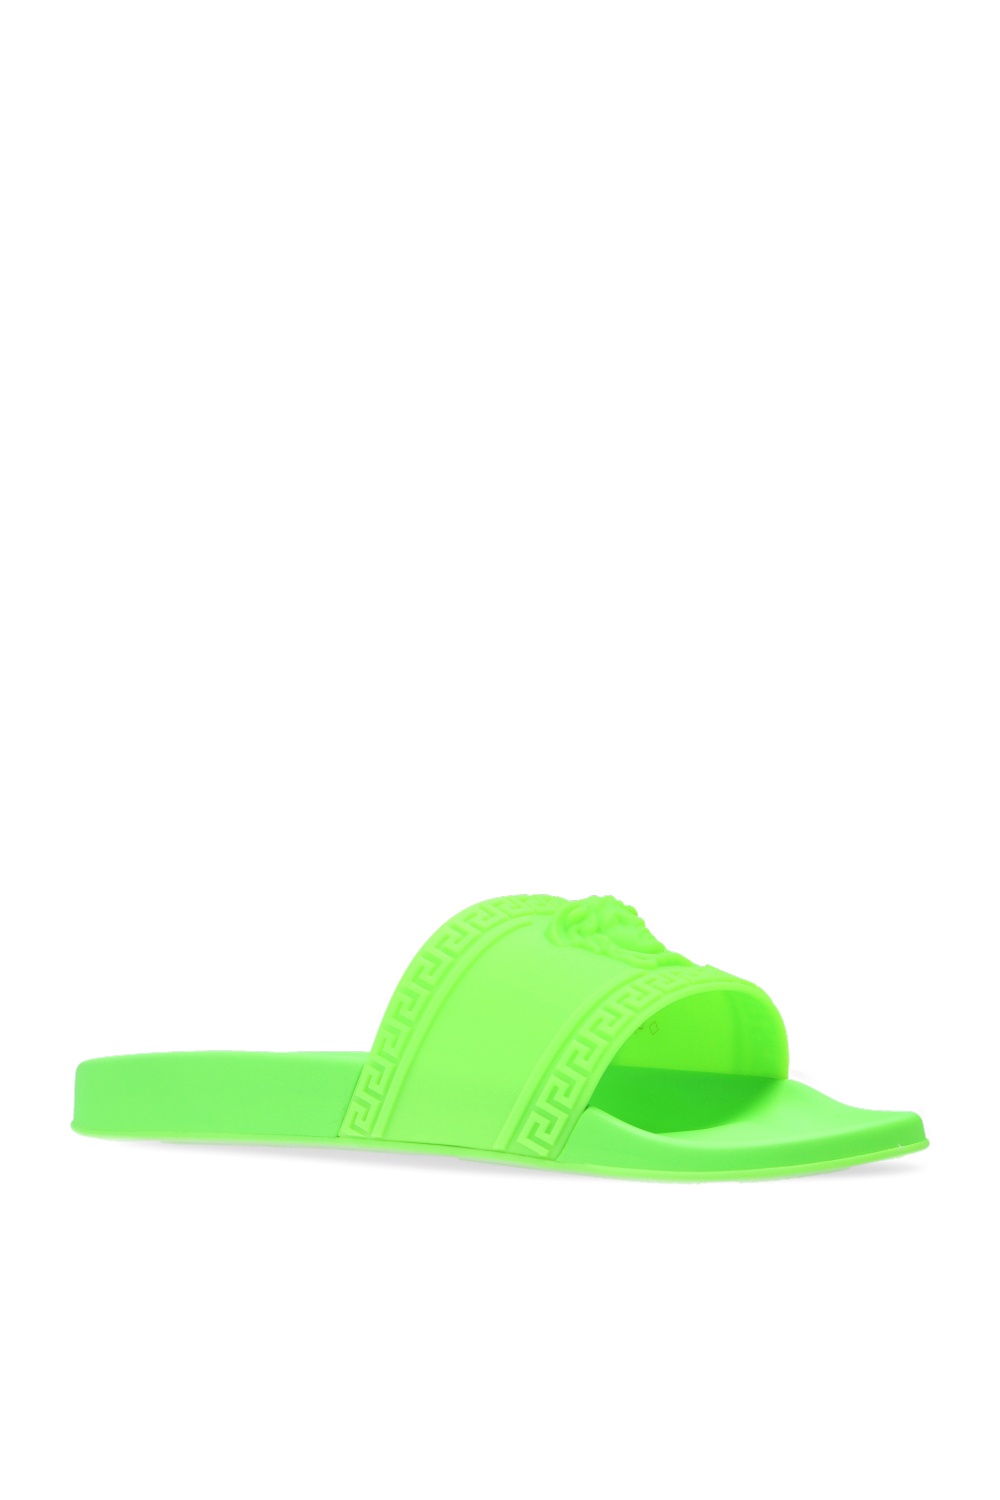 versace slides green